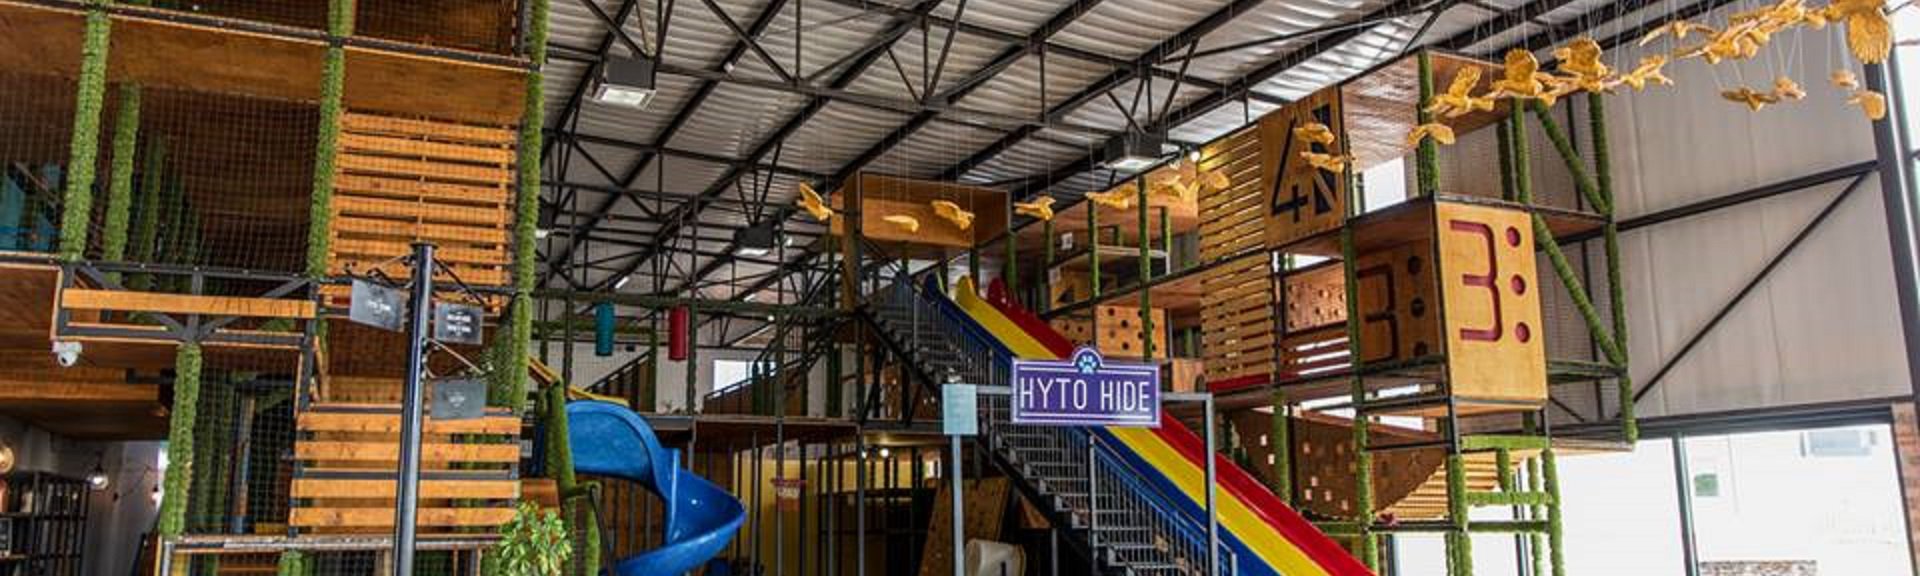 Hyto Tyto | Gauteng | Kids Indoor Party and Play Venue